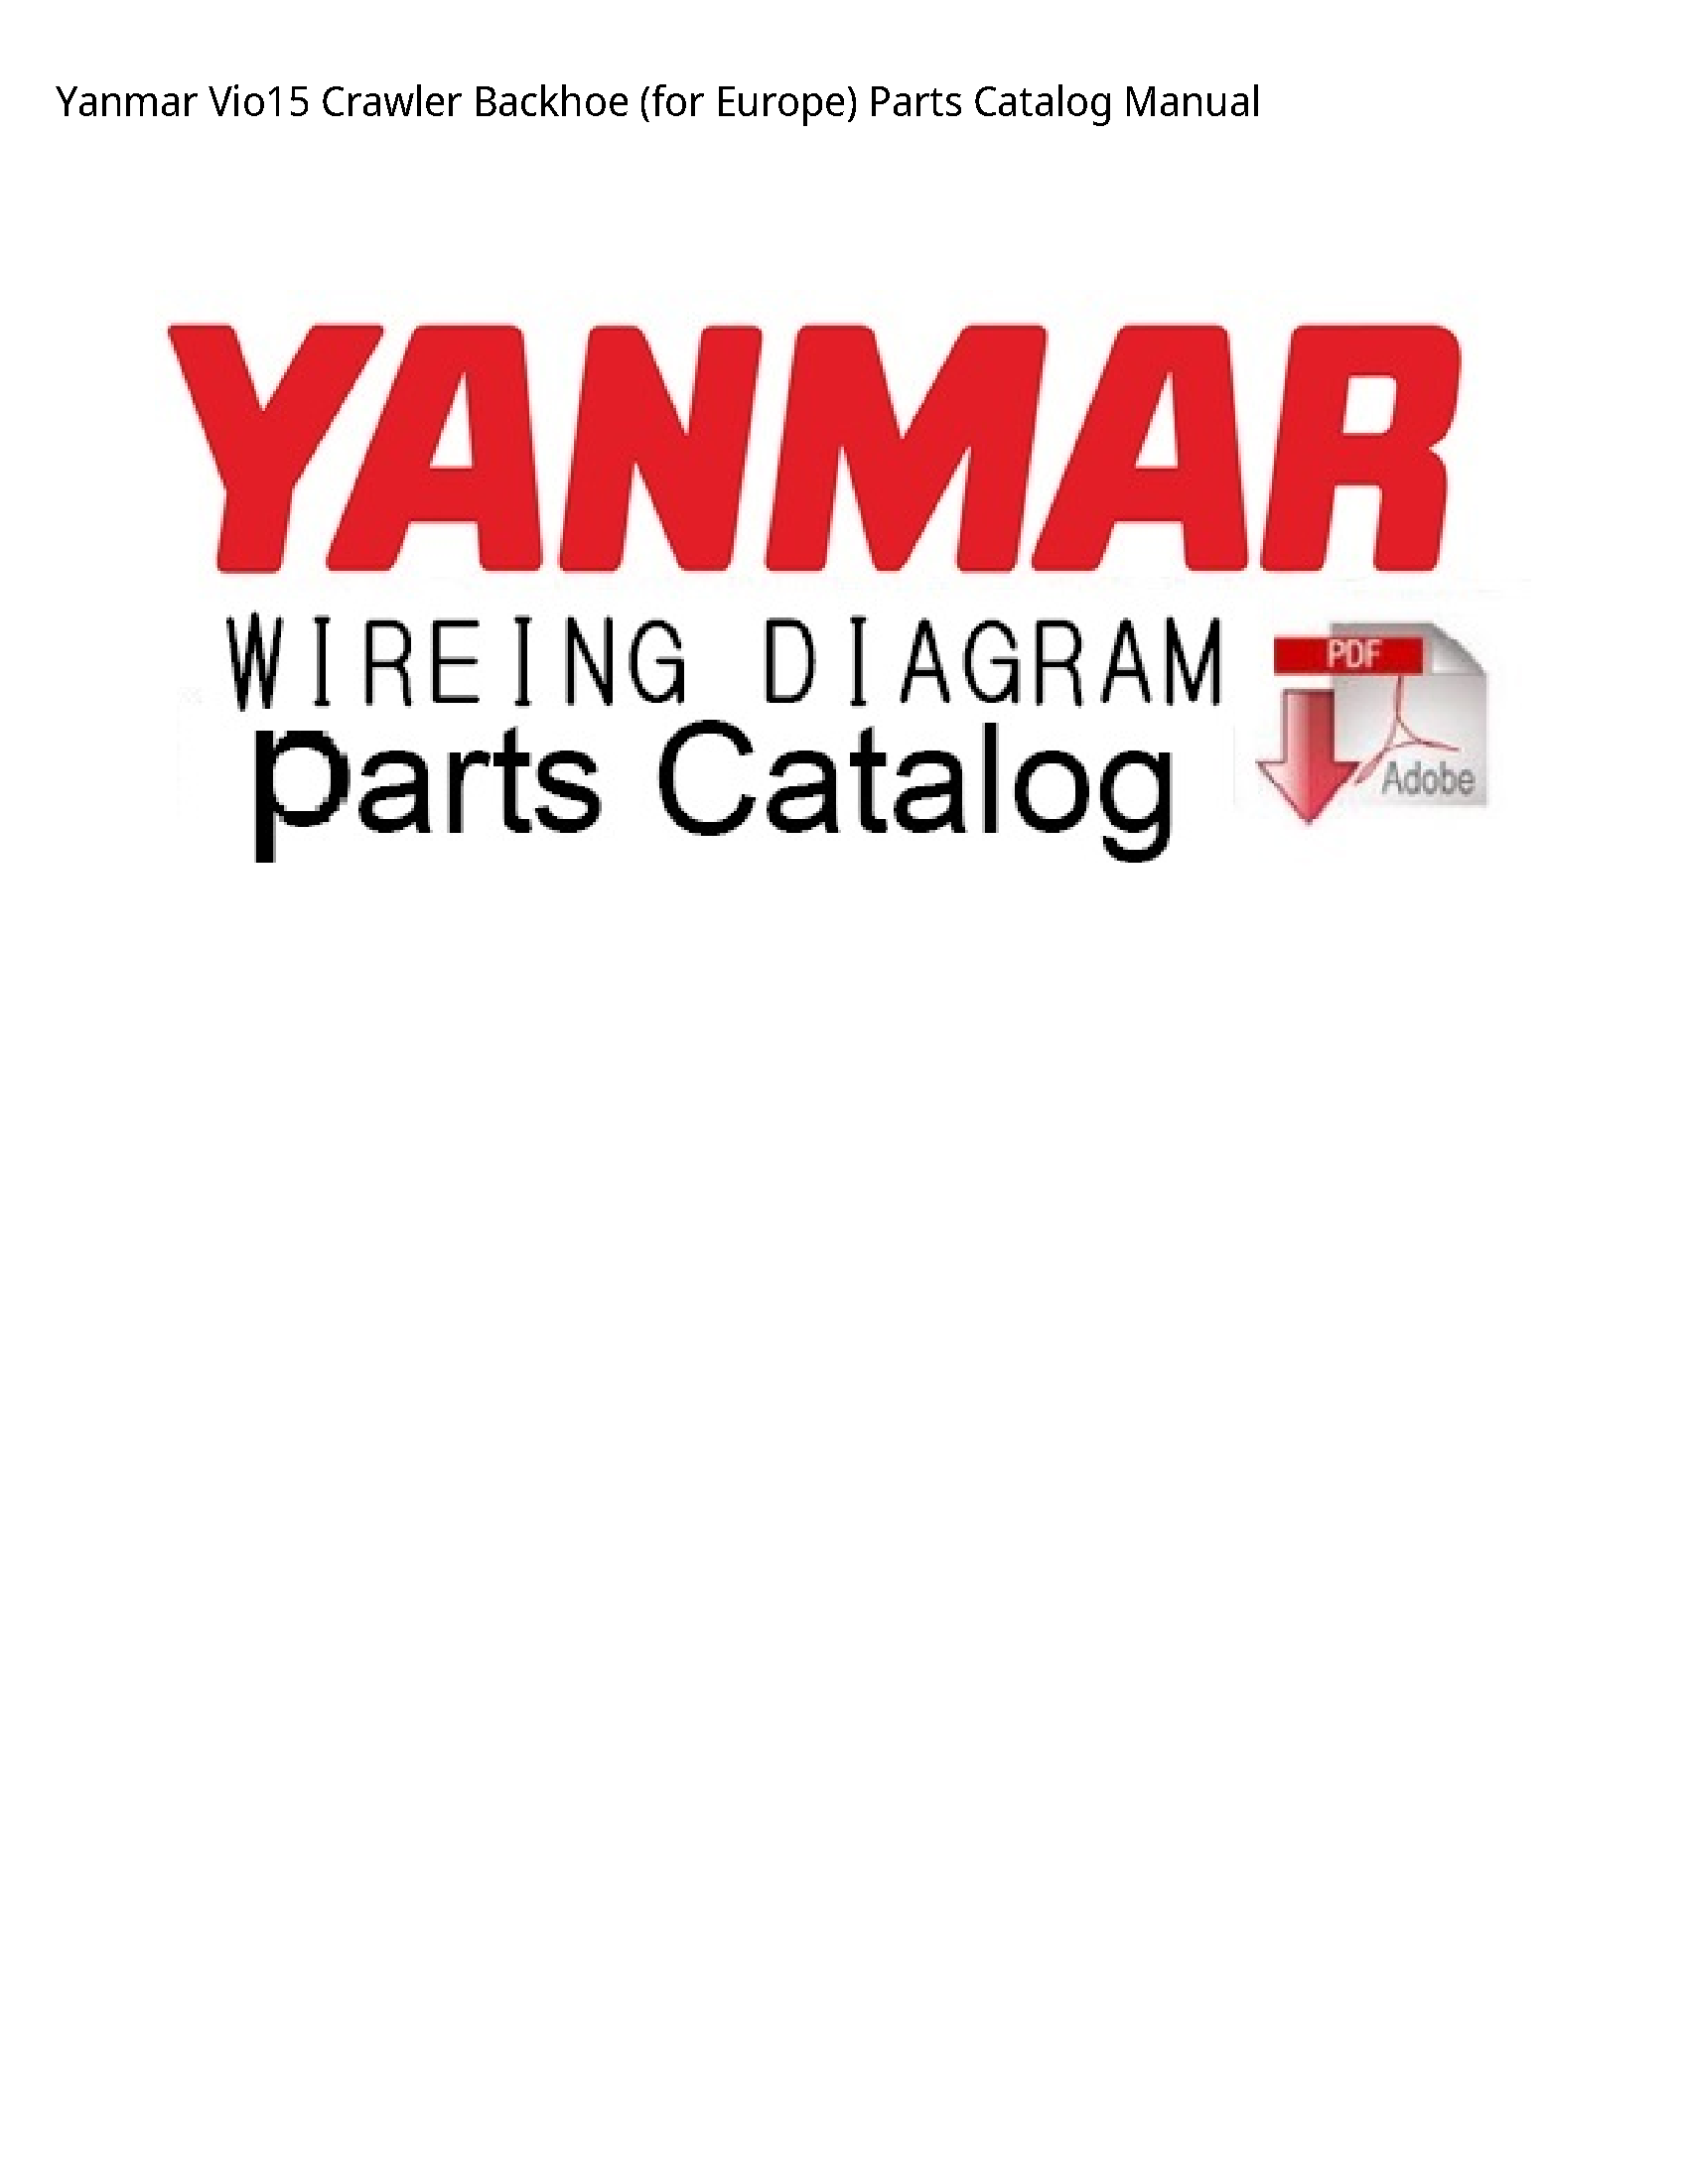 Yanmar Vio15 Crawler Backhoe (for Europe) Parts Catalog manual